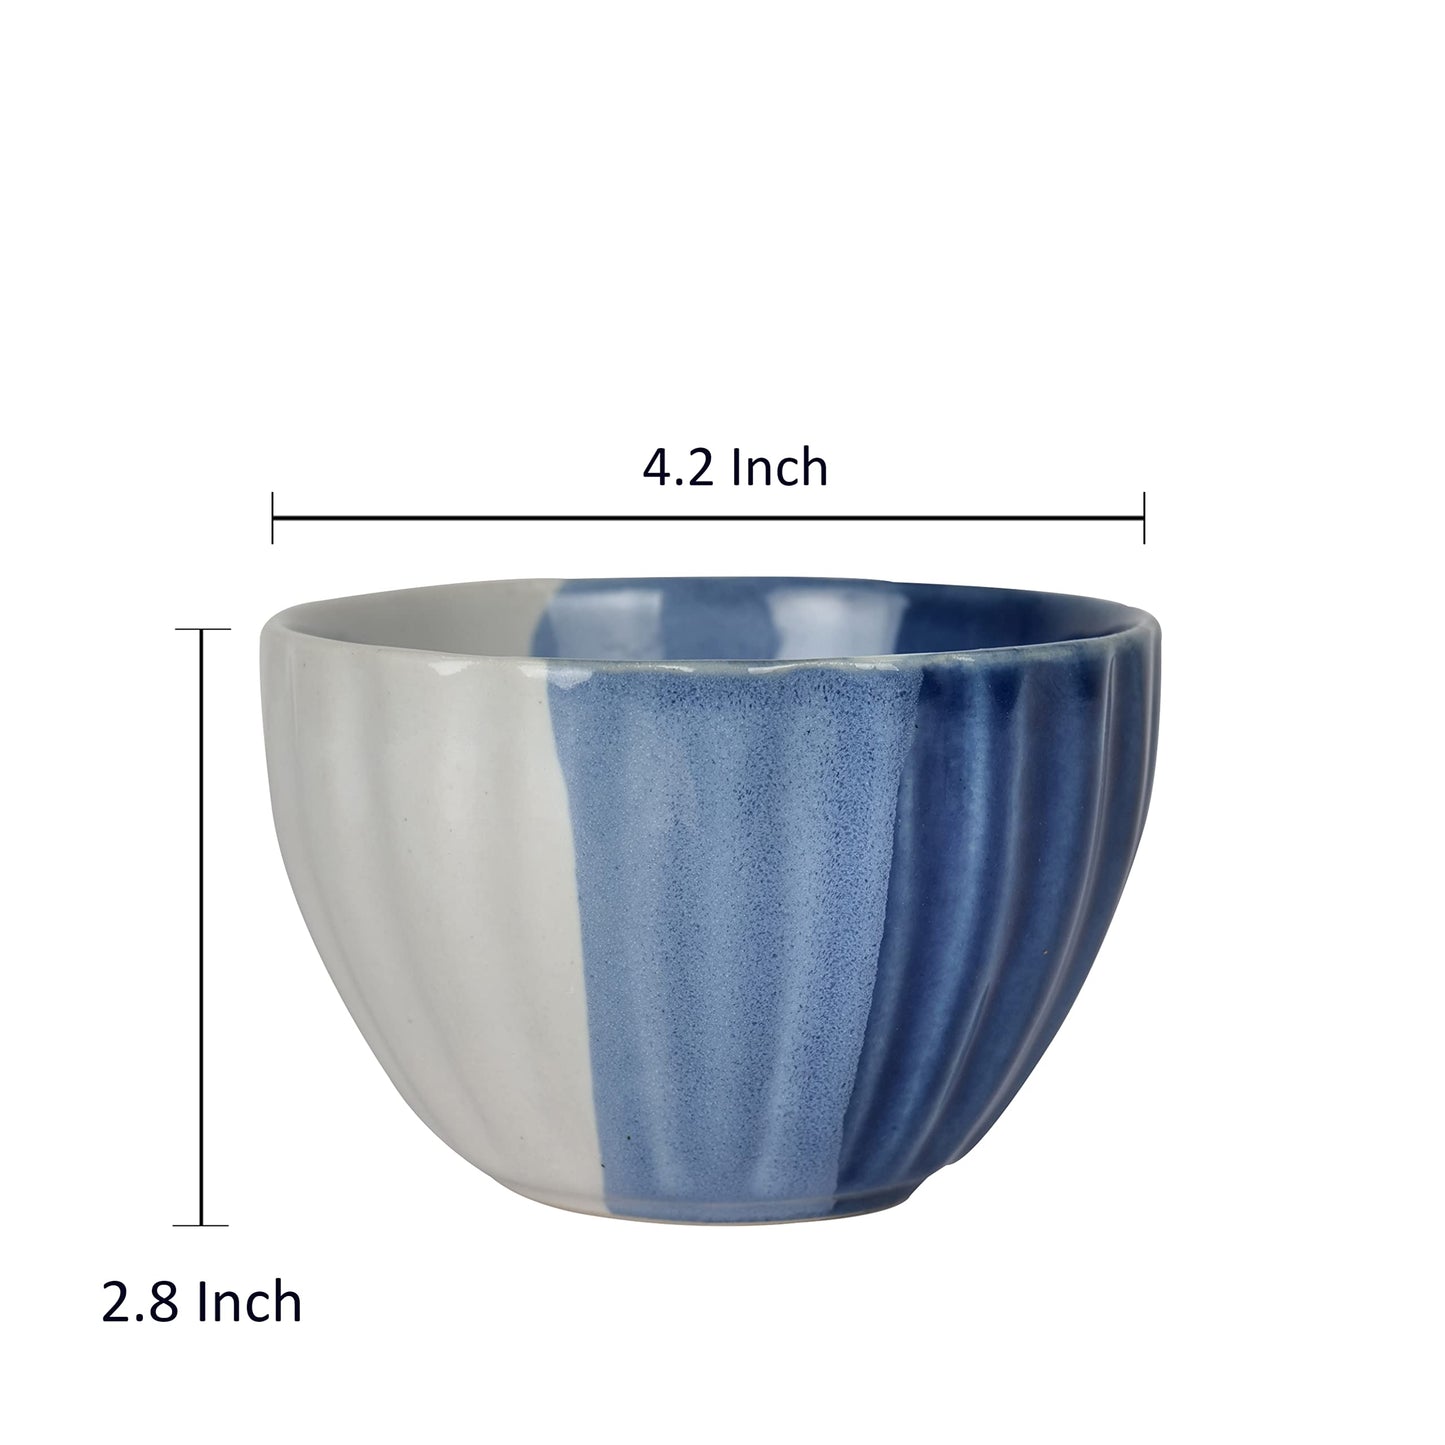 'Treble Blue Ridged' Ceramic Dining Bowls (Set of 4, 300 ml)